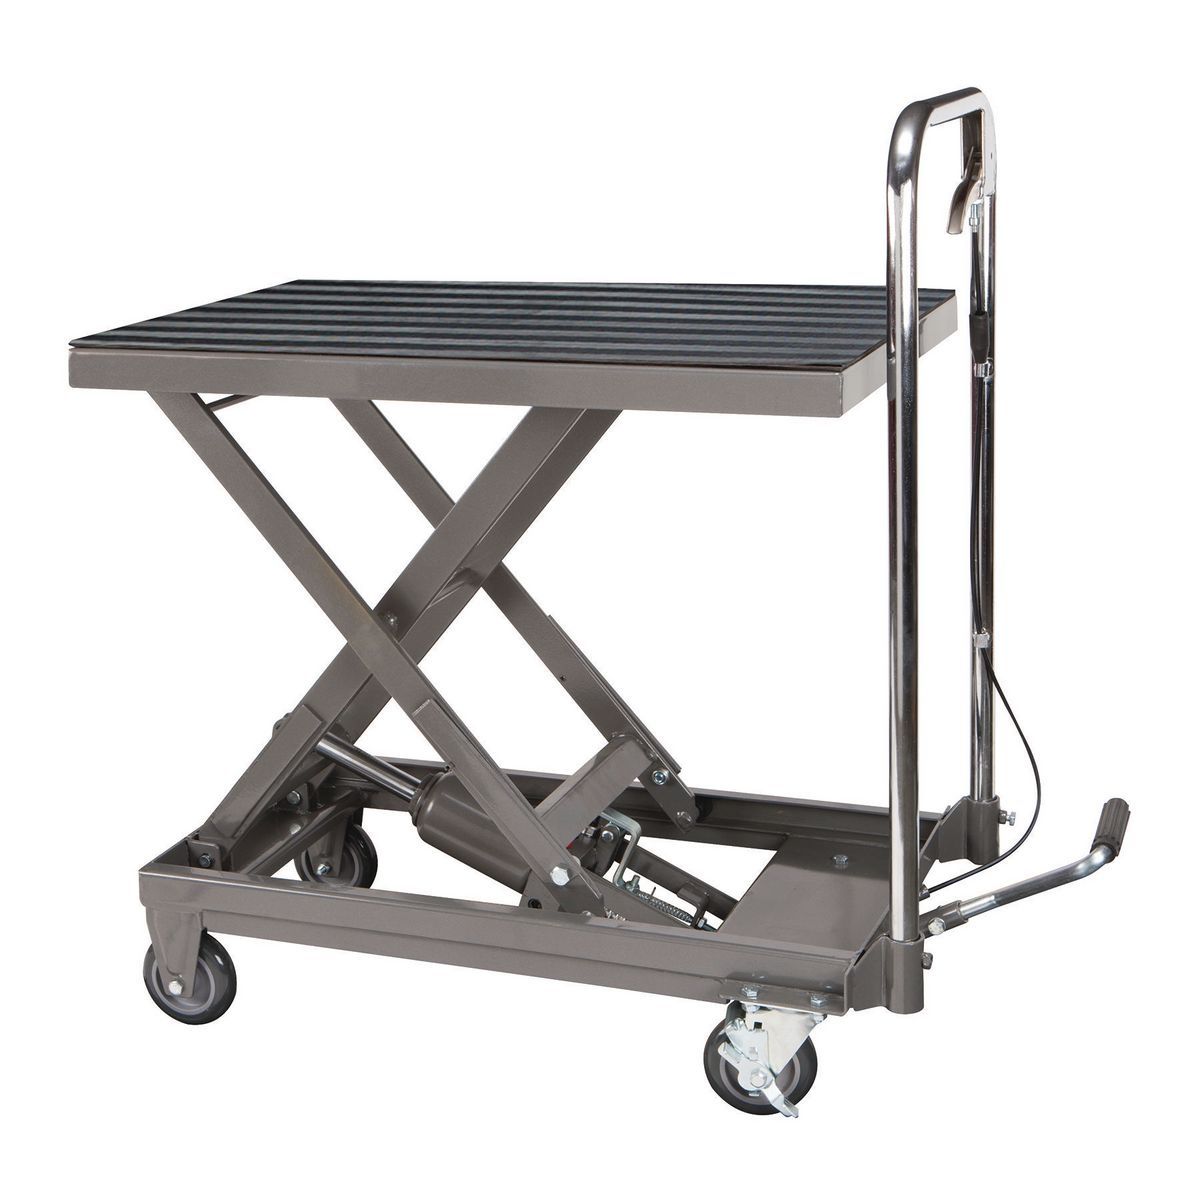 PITTSBURGH AUTOMOTIVE 500 lb. Capacity Hydraulic Table Cart